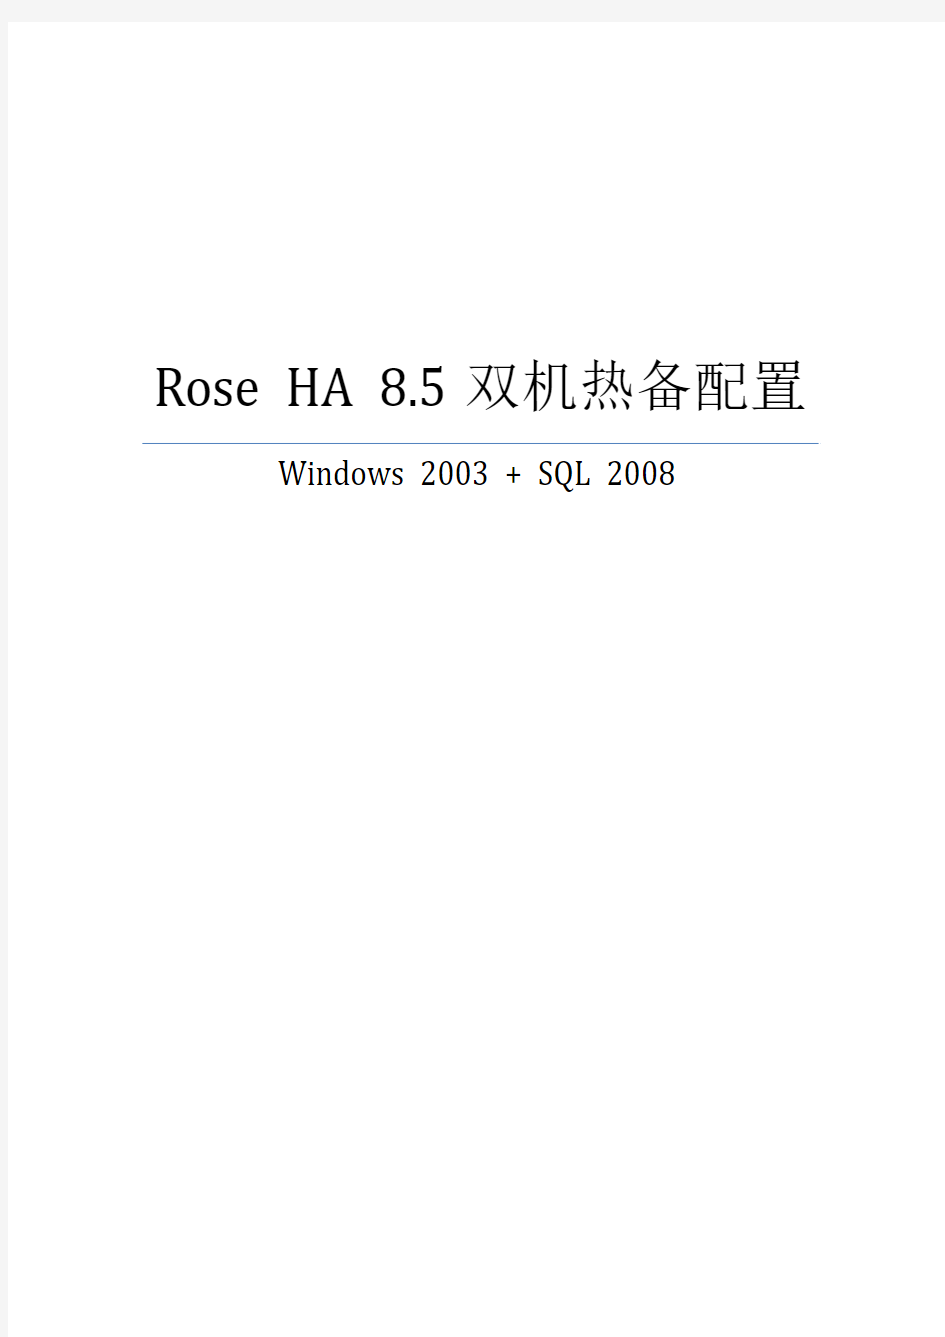 RoseHA双机热备配置(windows_2003+SQL_2008_)技术方案